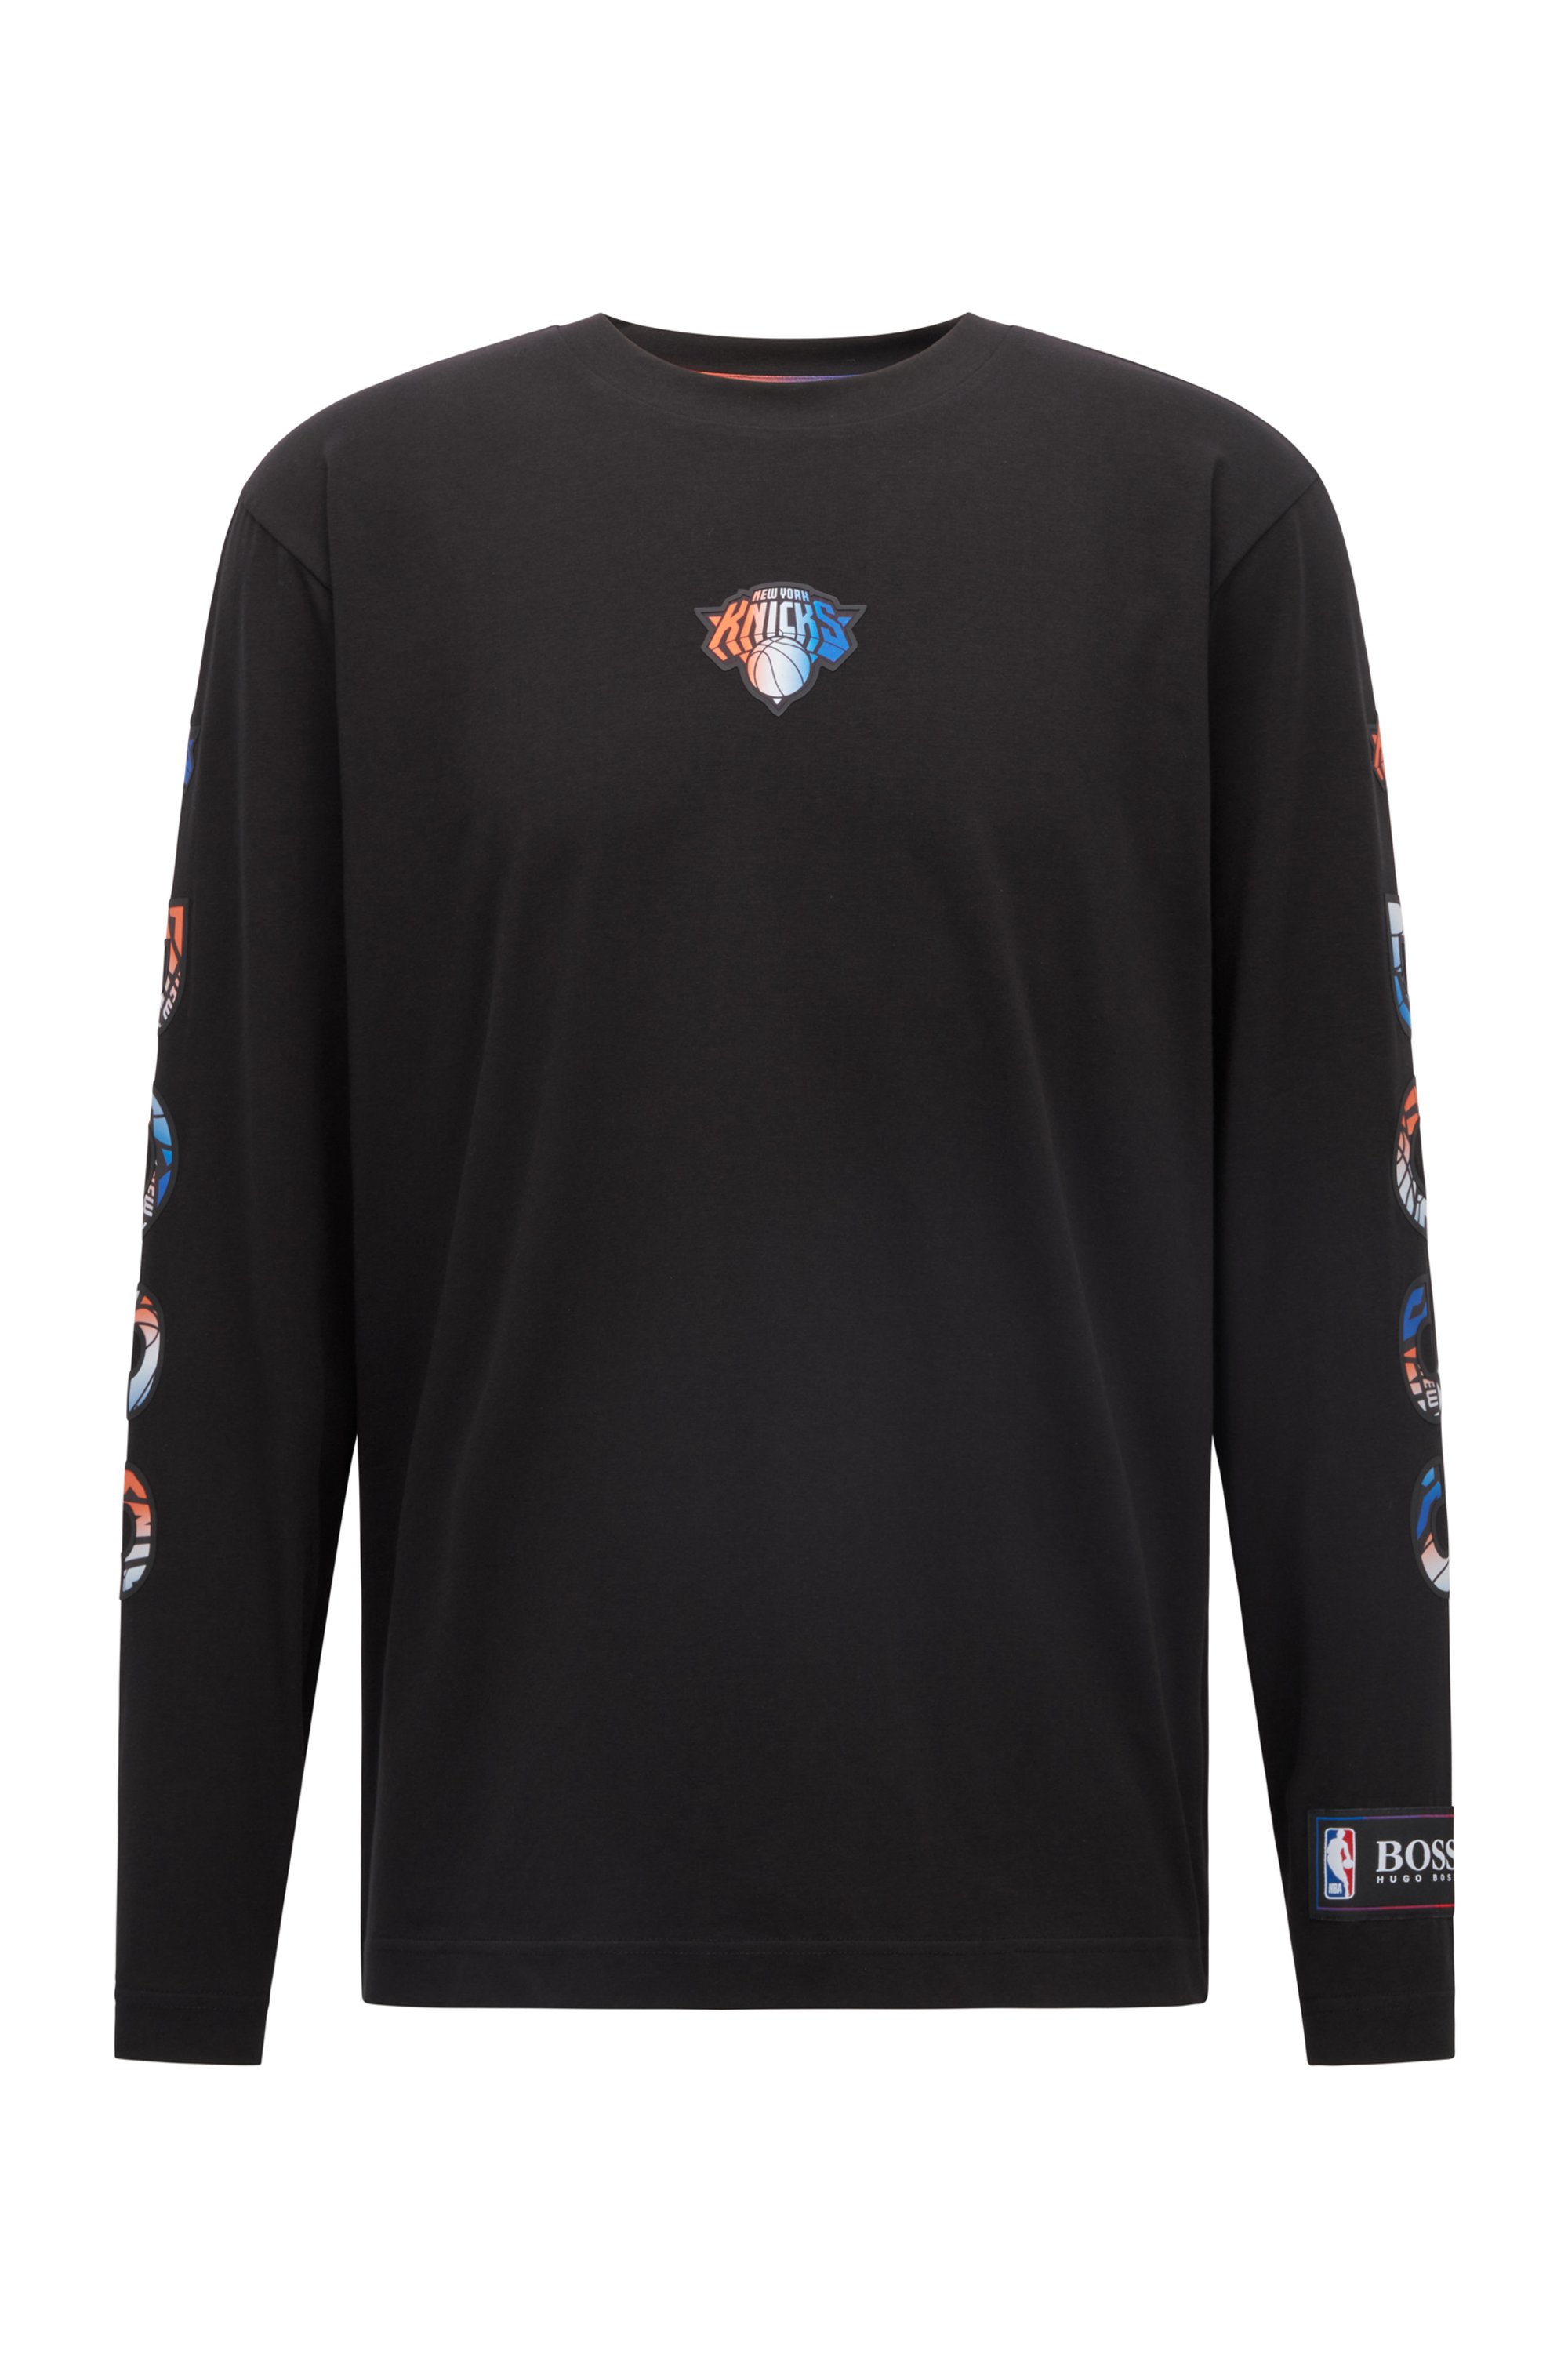 BOSS x NBA long-sleeved T-shirt with colorful branding, NBA Knicks